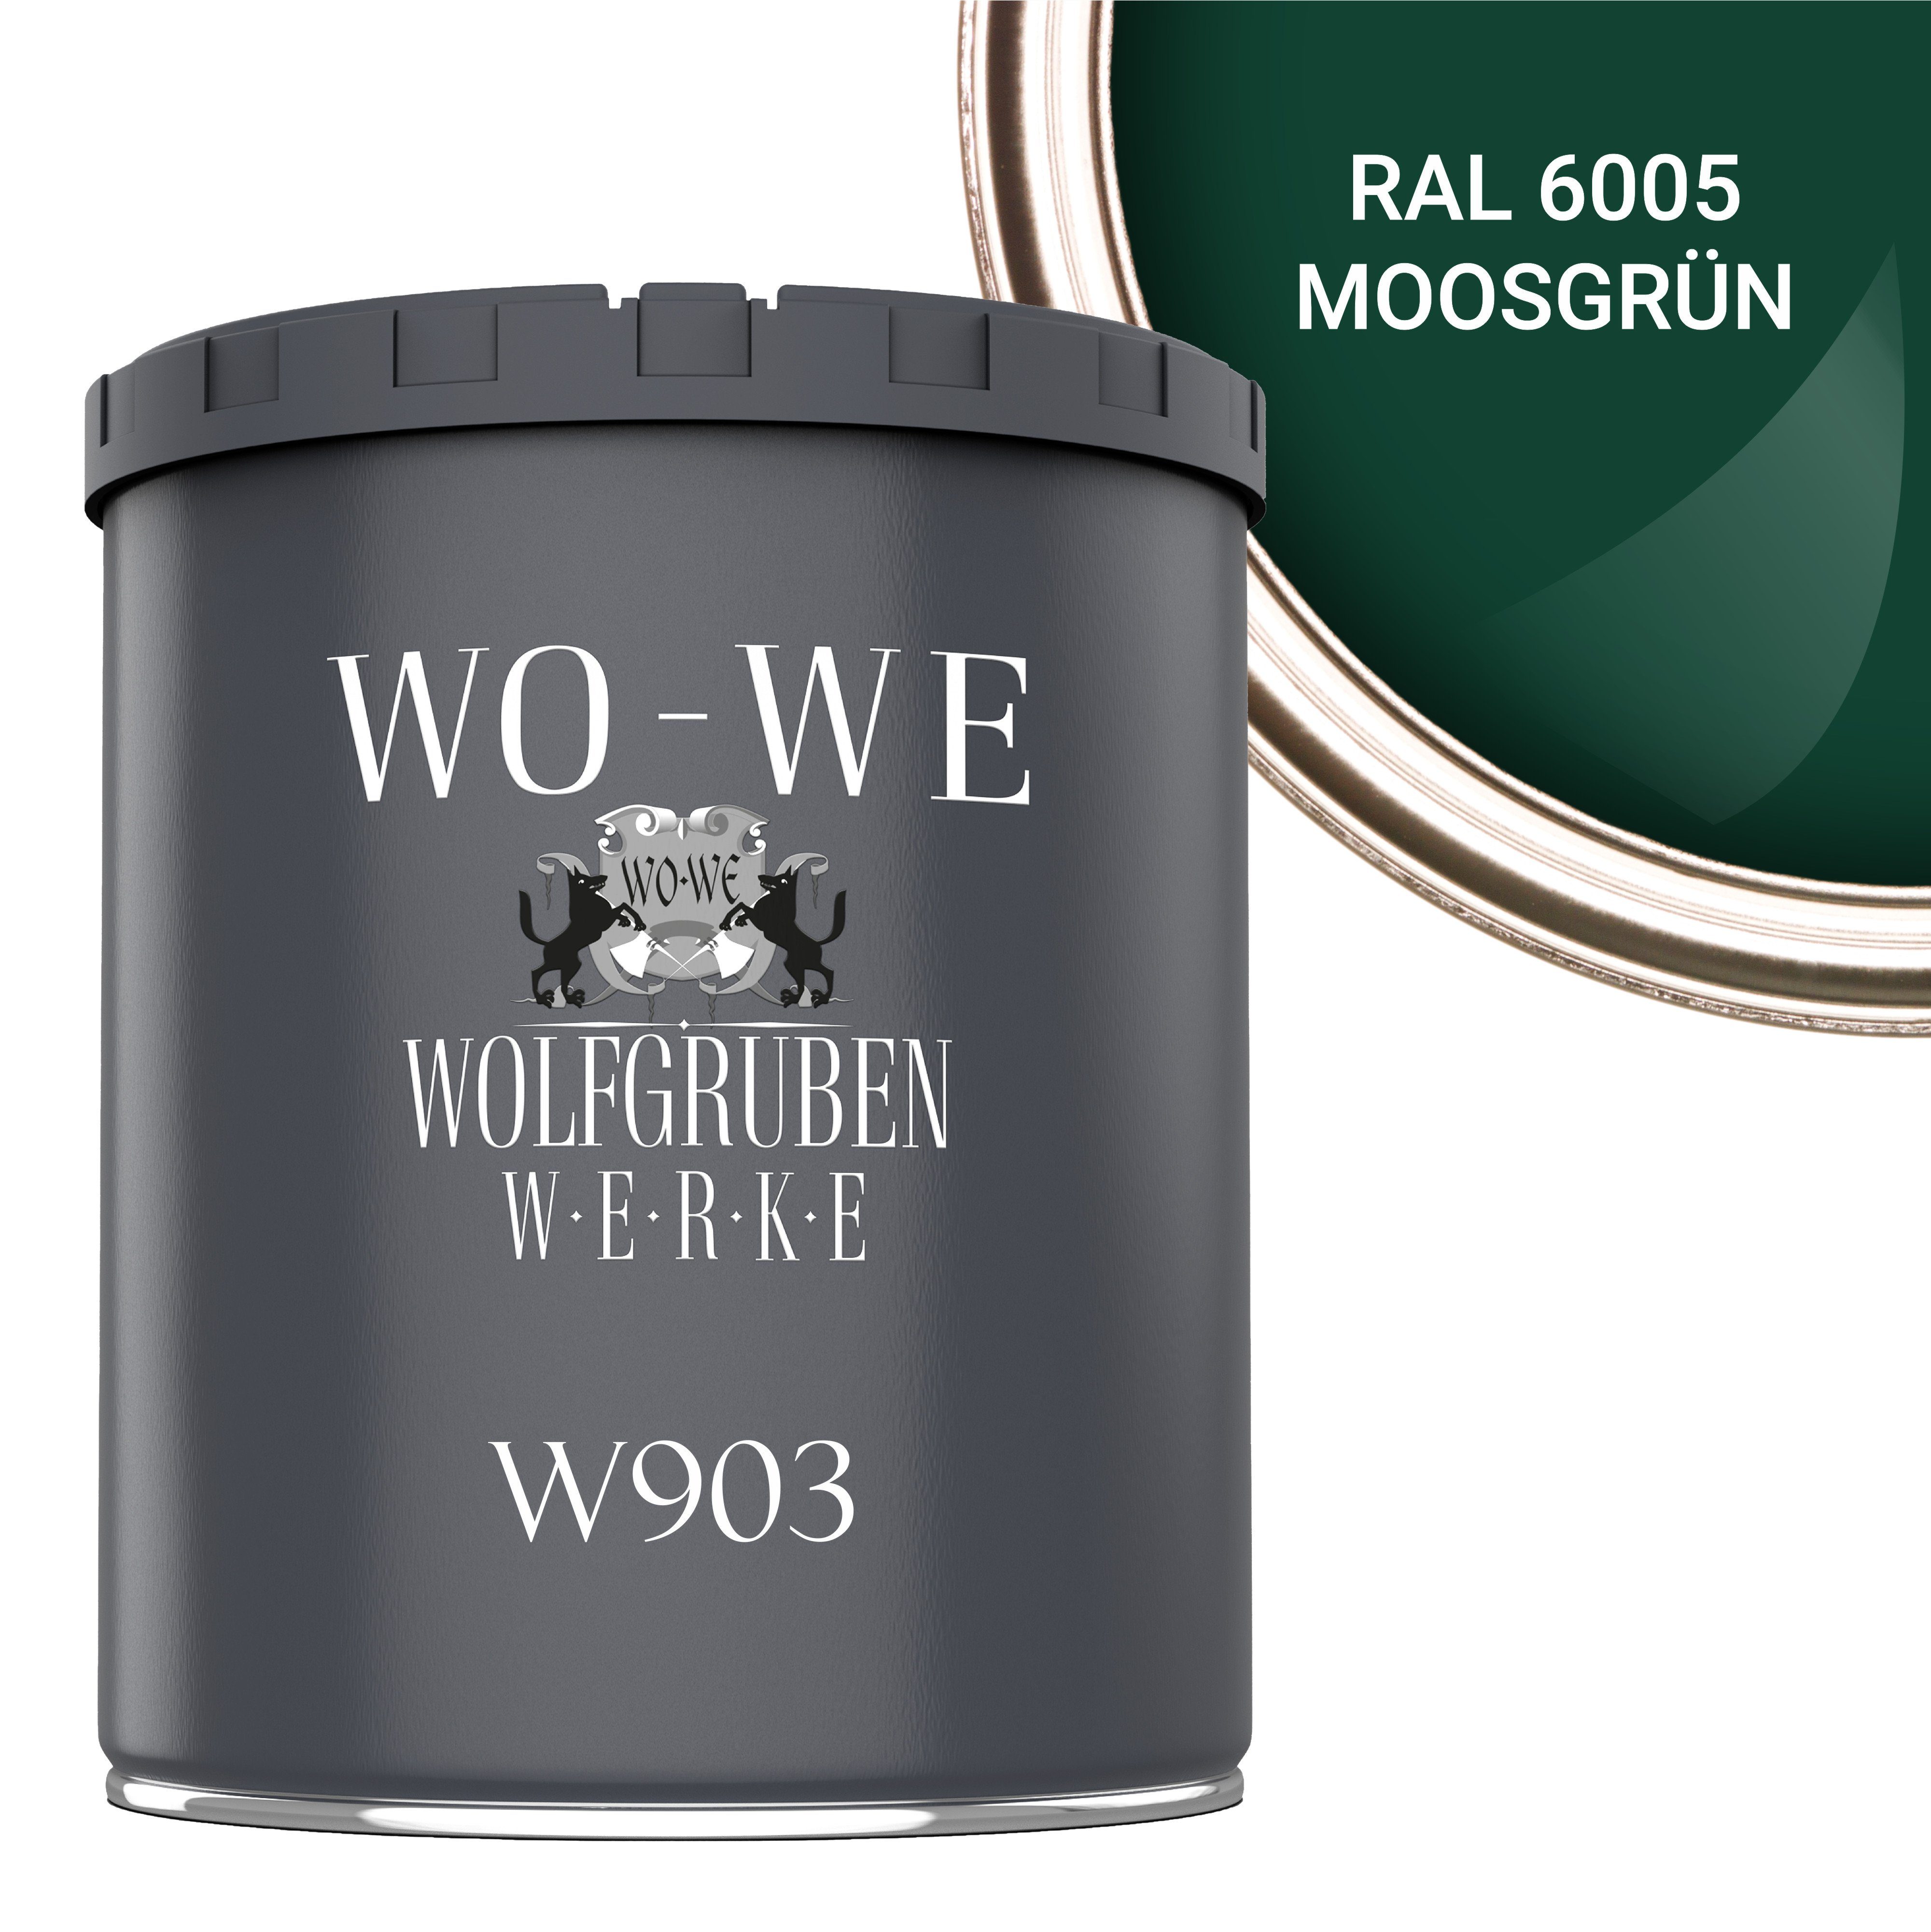 WO-WE Heizkörperlack Heizkörperfarbe Heizungsfarbe W903, Moosgrün Wasserbasis RAL 1-10L, 6005